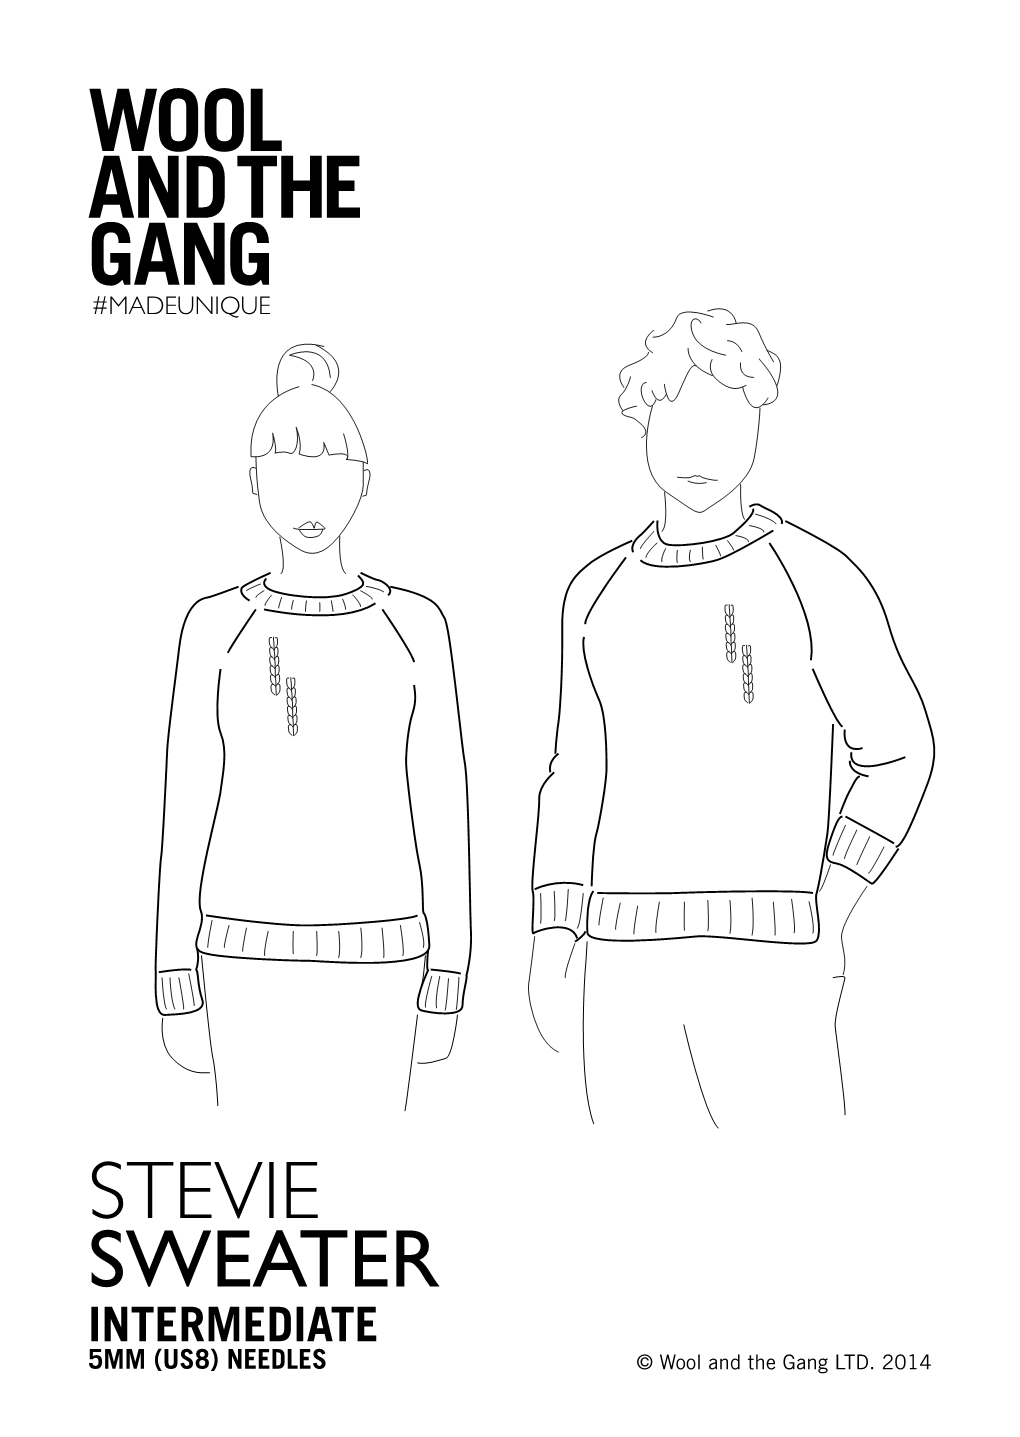 STEVIE SWEATER INTERMEDIATE 5MM (US8) NEEDLES © Wool and the Gang LTD